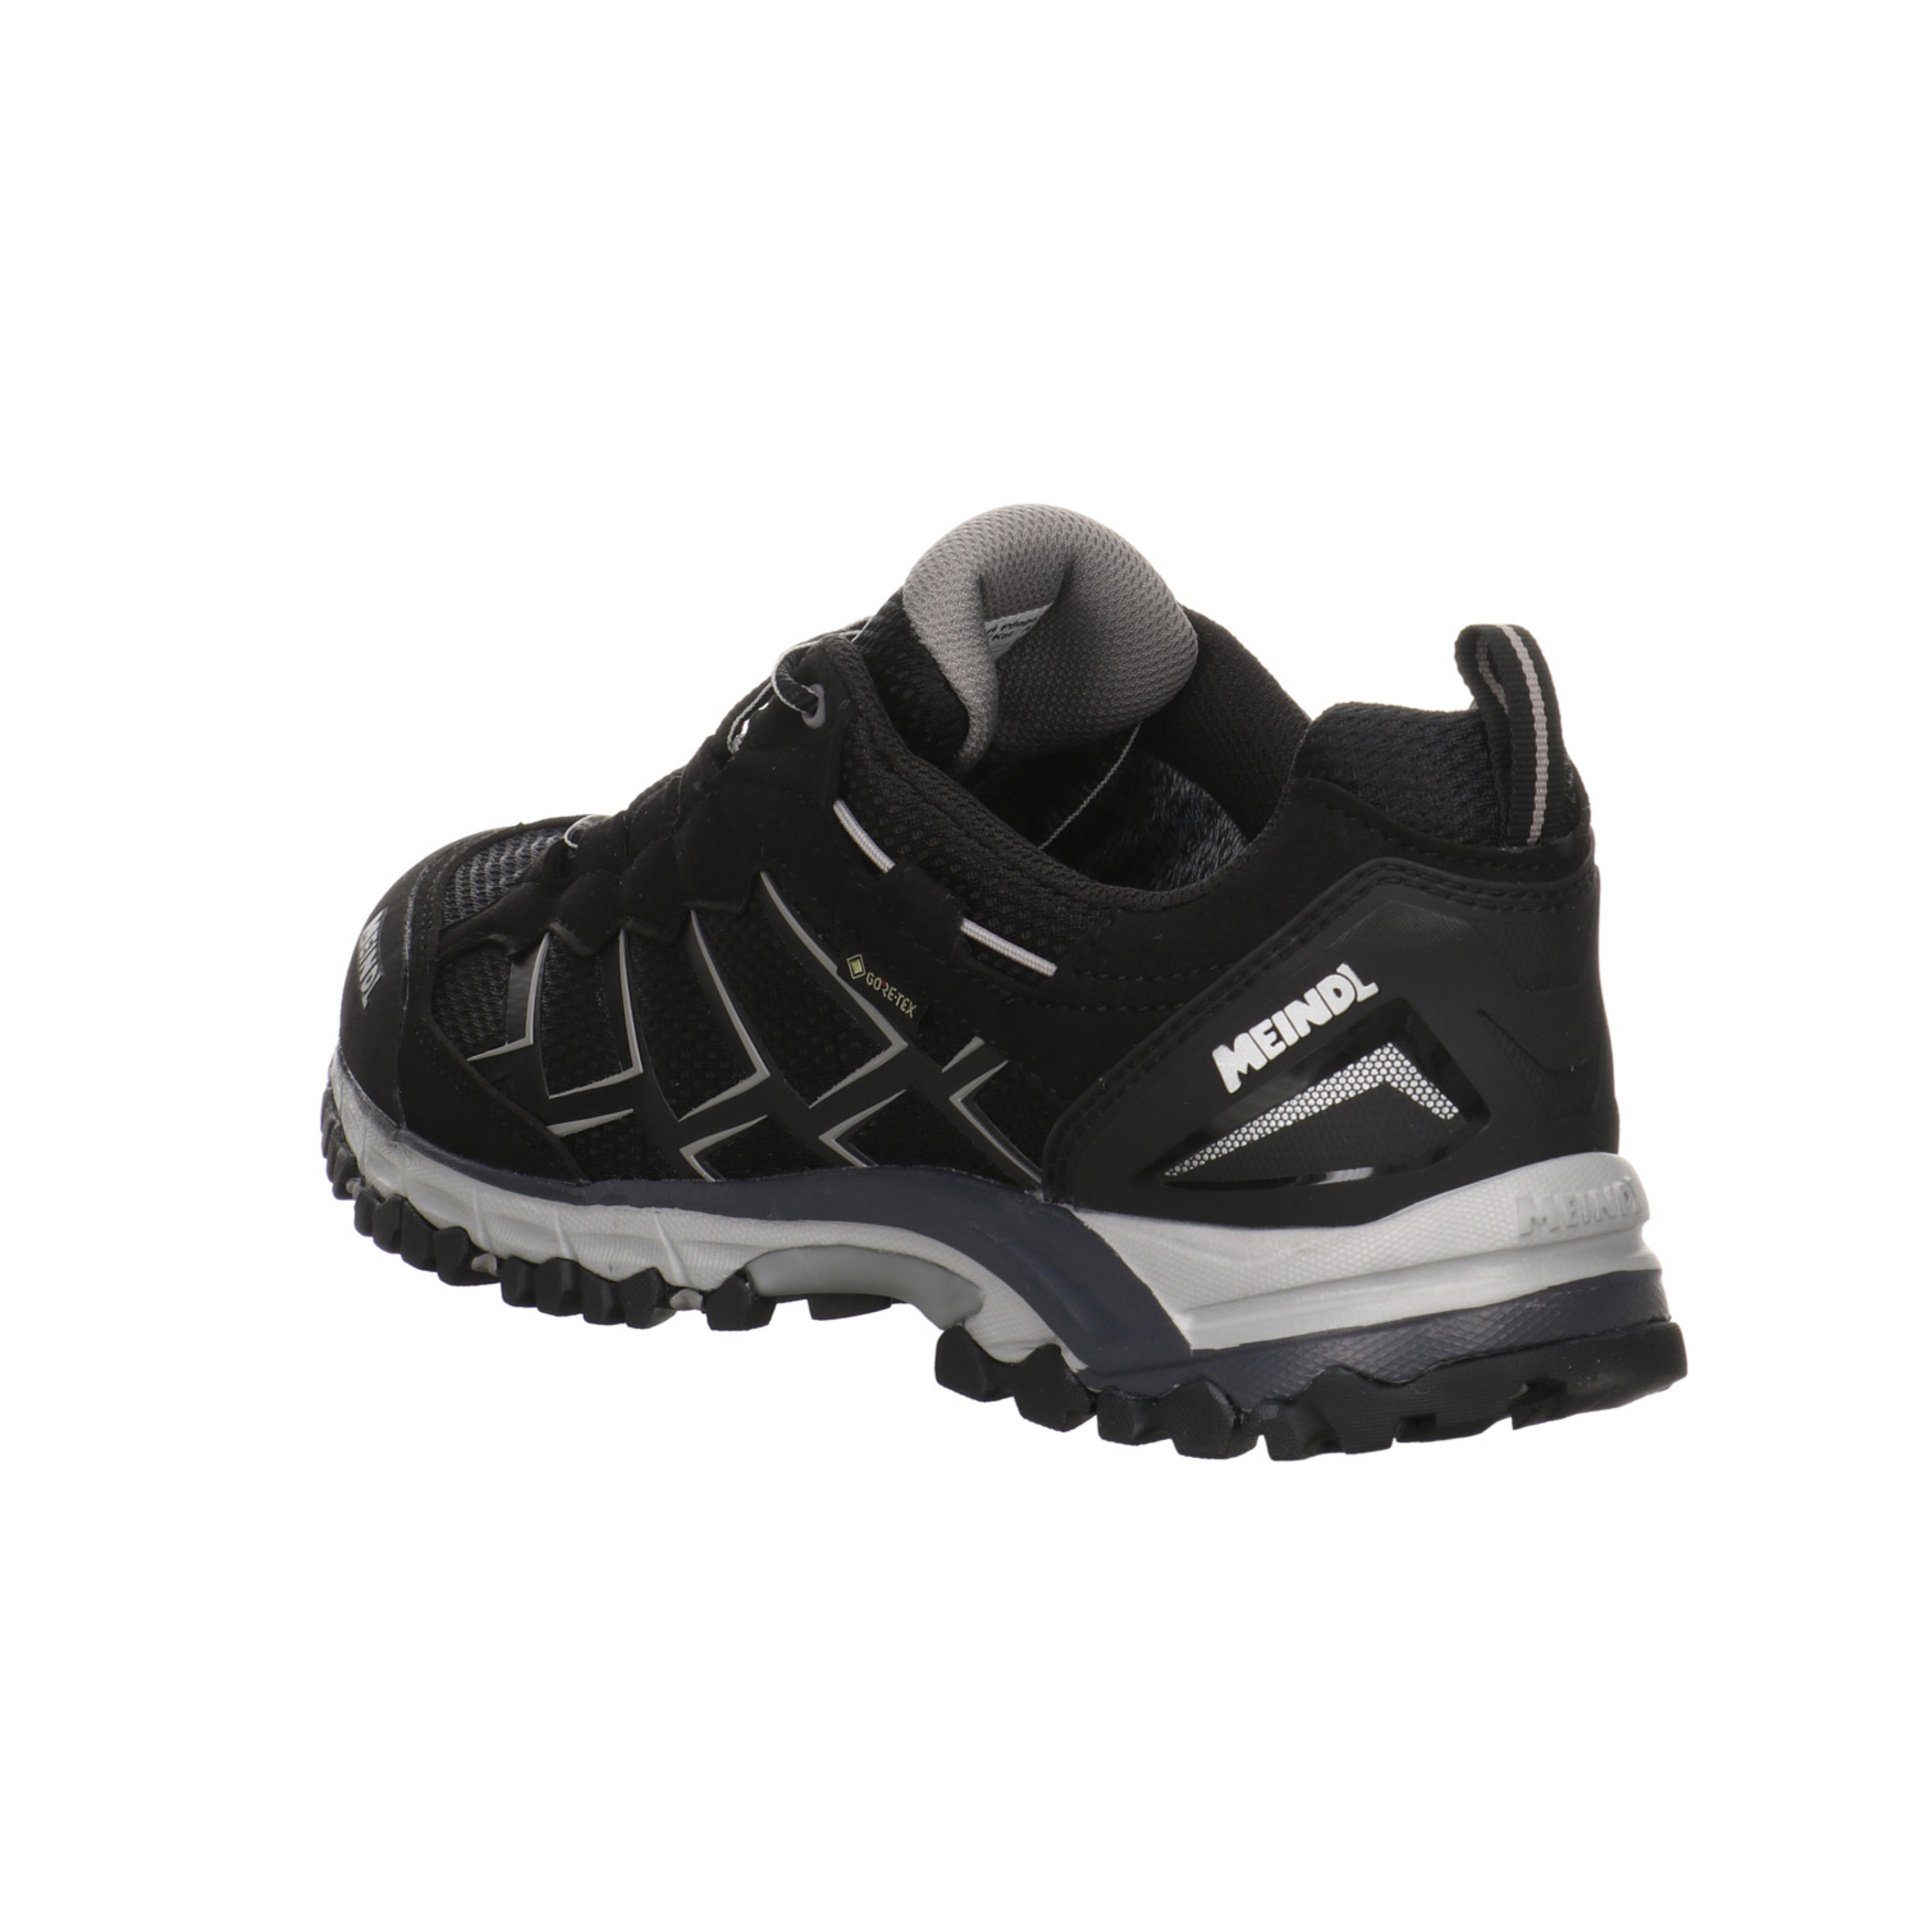 Meindl Herren Outdoor Schuhe Caribe Textil Outdoorschuh black/grey GTX Outdoorschuh